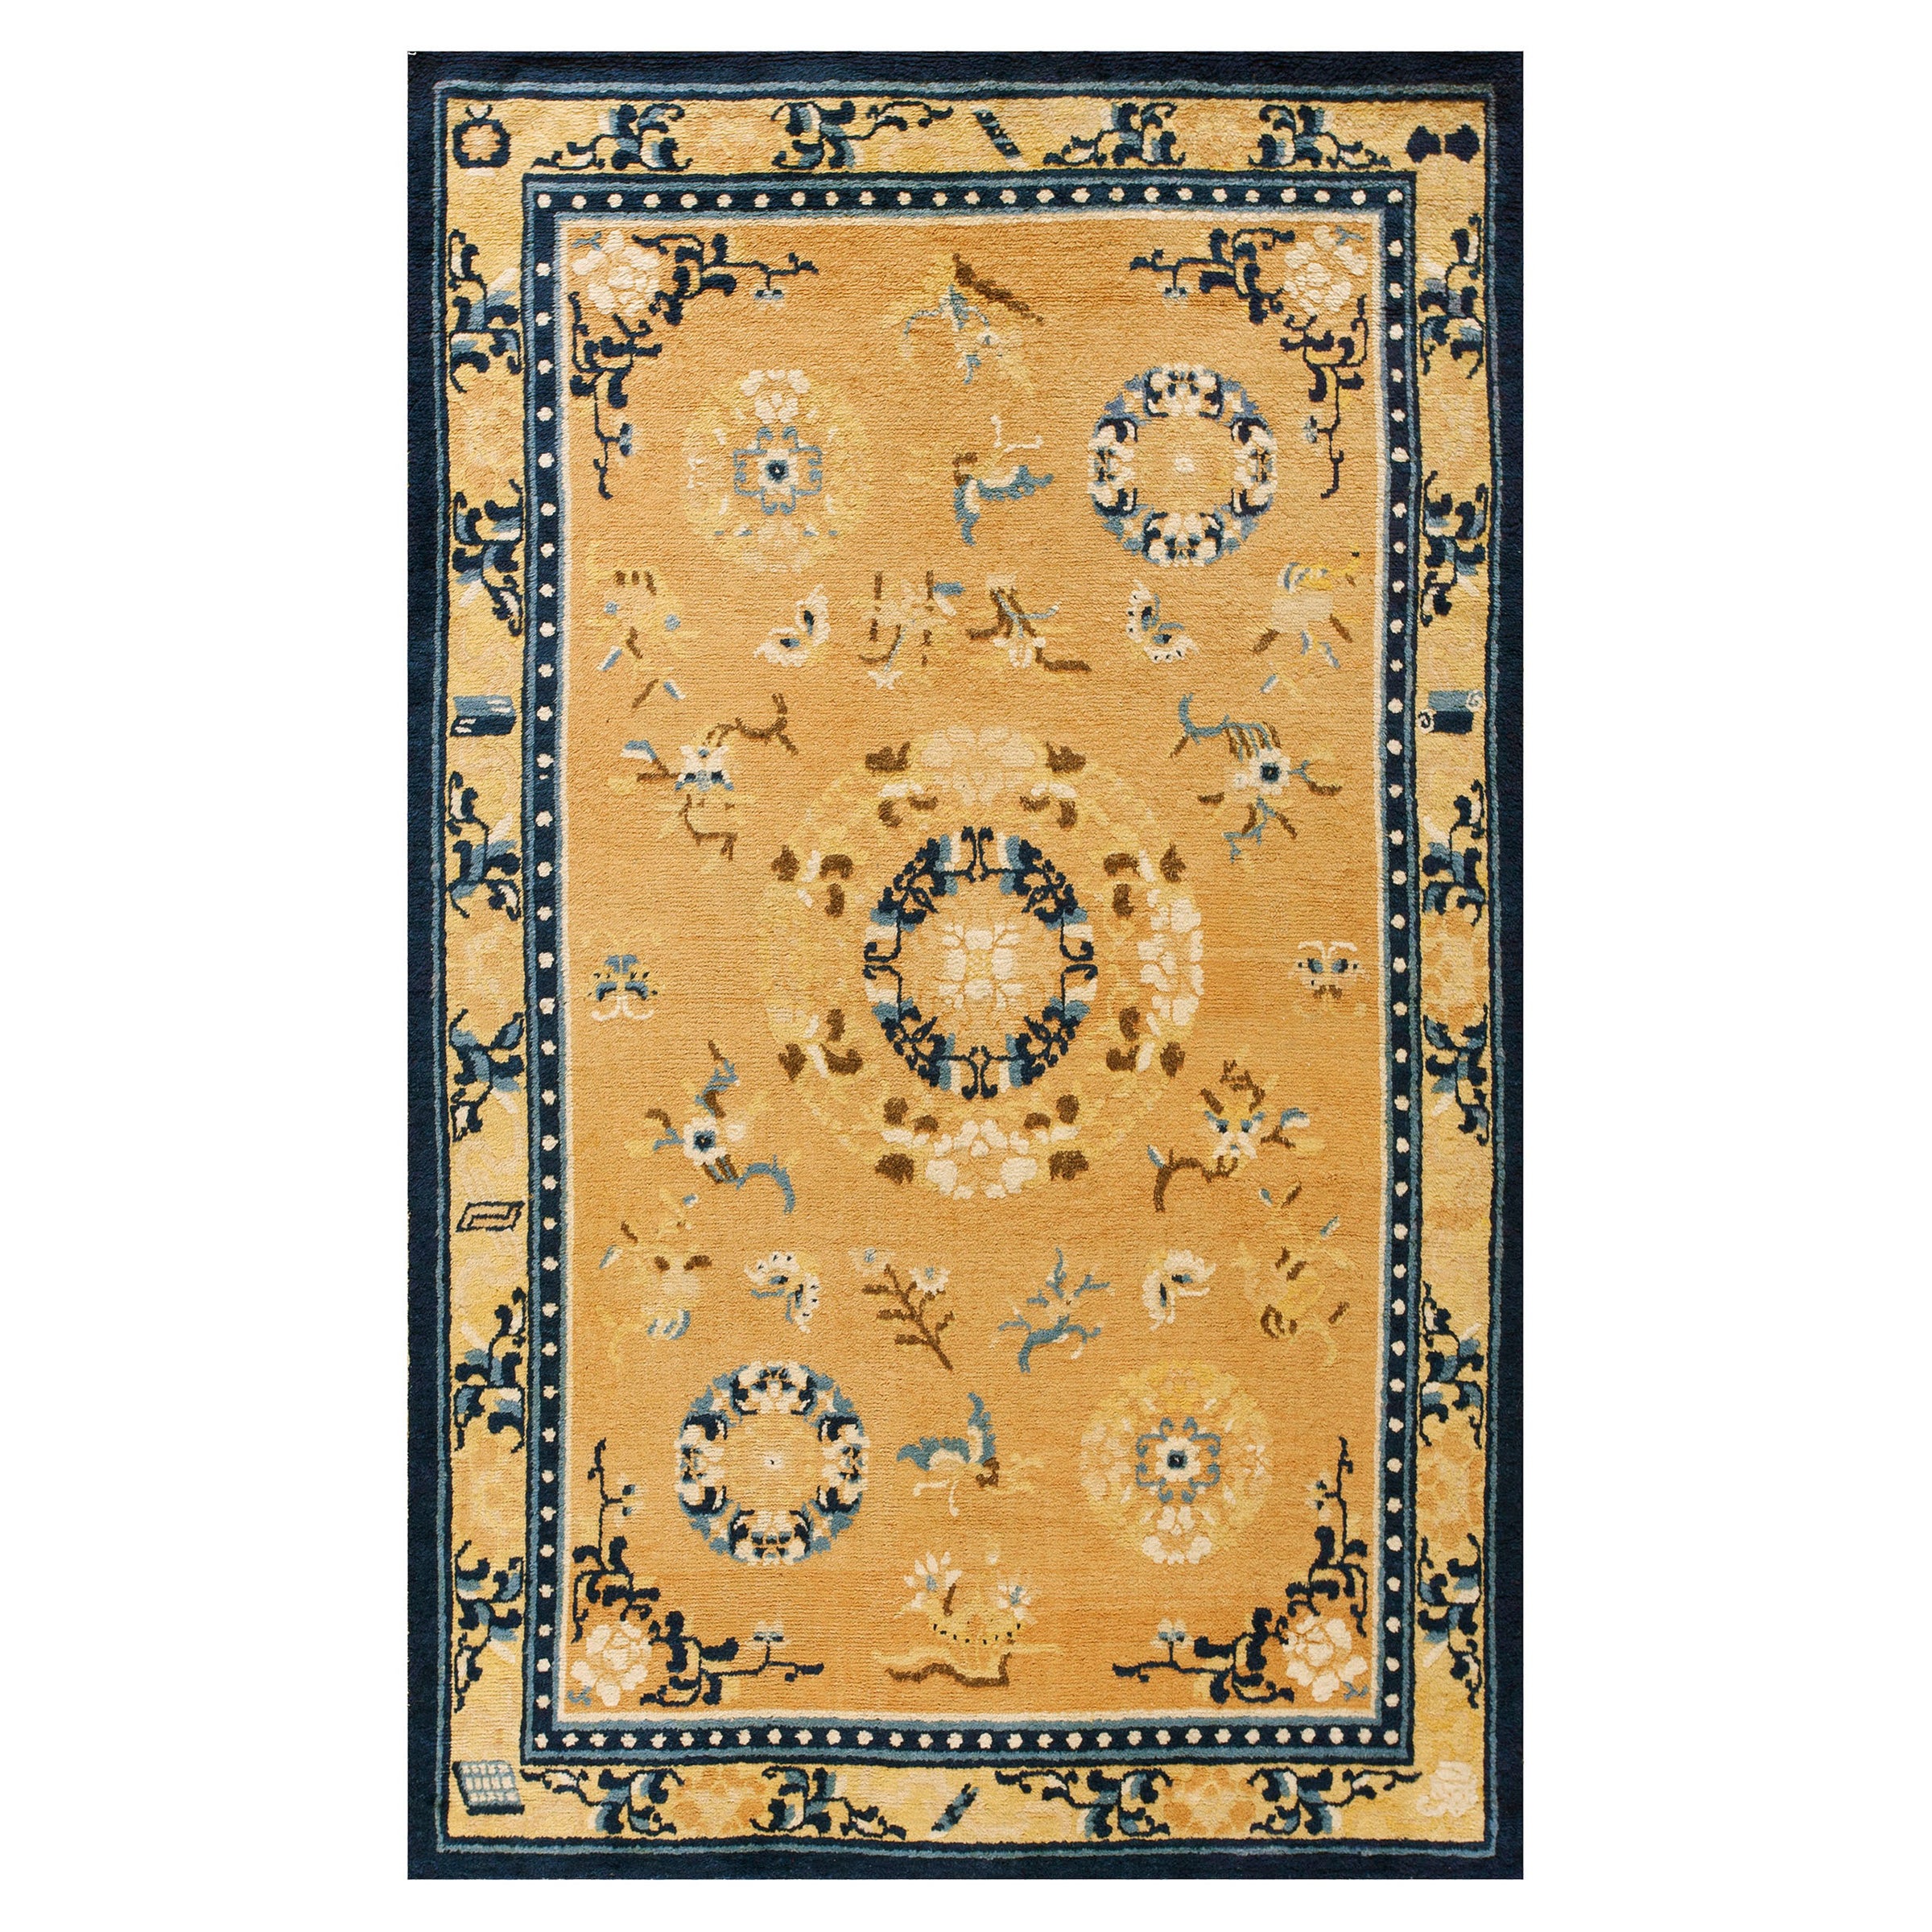 Late 18th Century Chinese Ningxia Carpet ( 5' x 8'1'' - 152 x 246 )